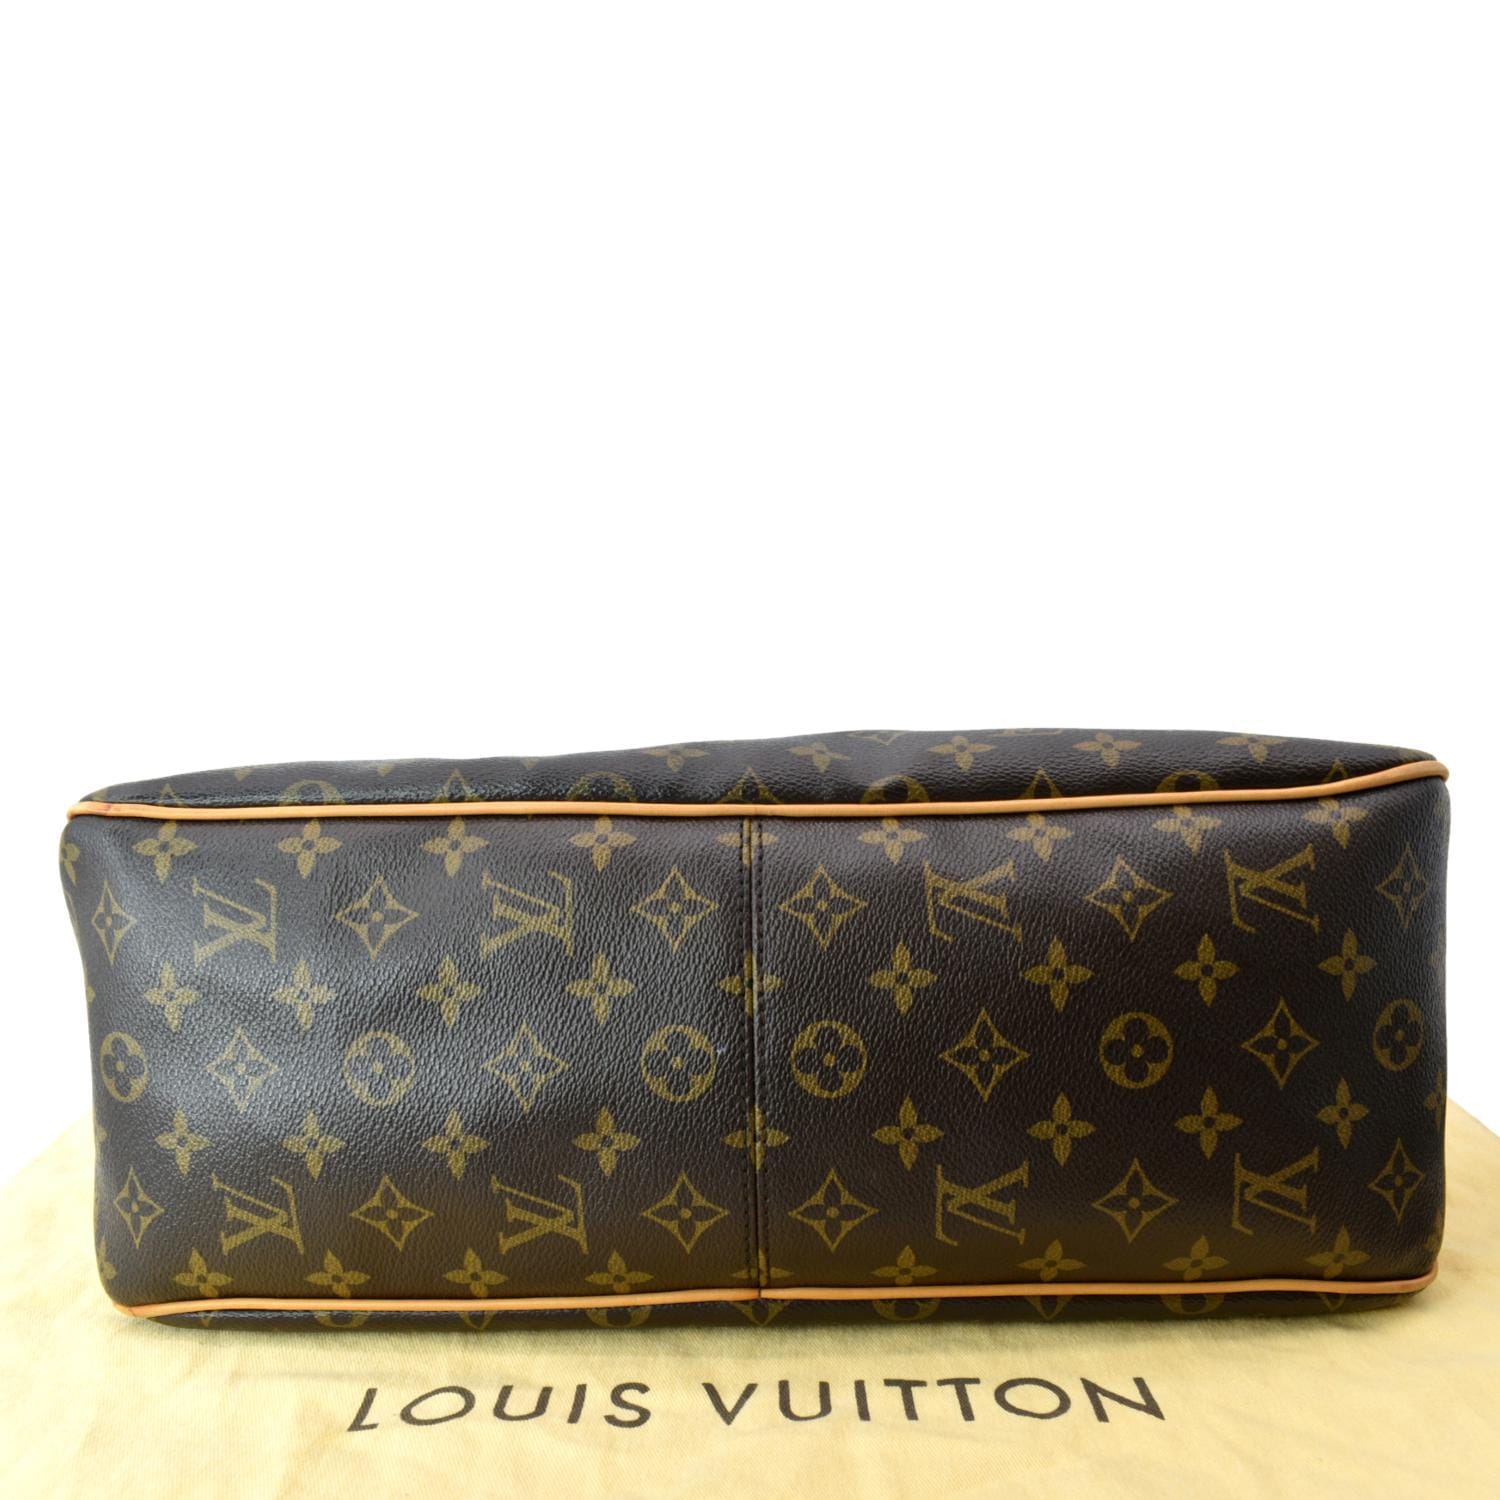 Authentic Louis Vuitton Delightful MM Monogram M40353 Guaranteed Hobo Bag  LD537 